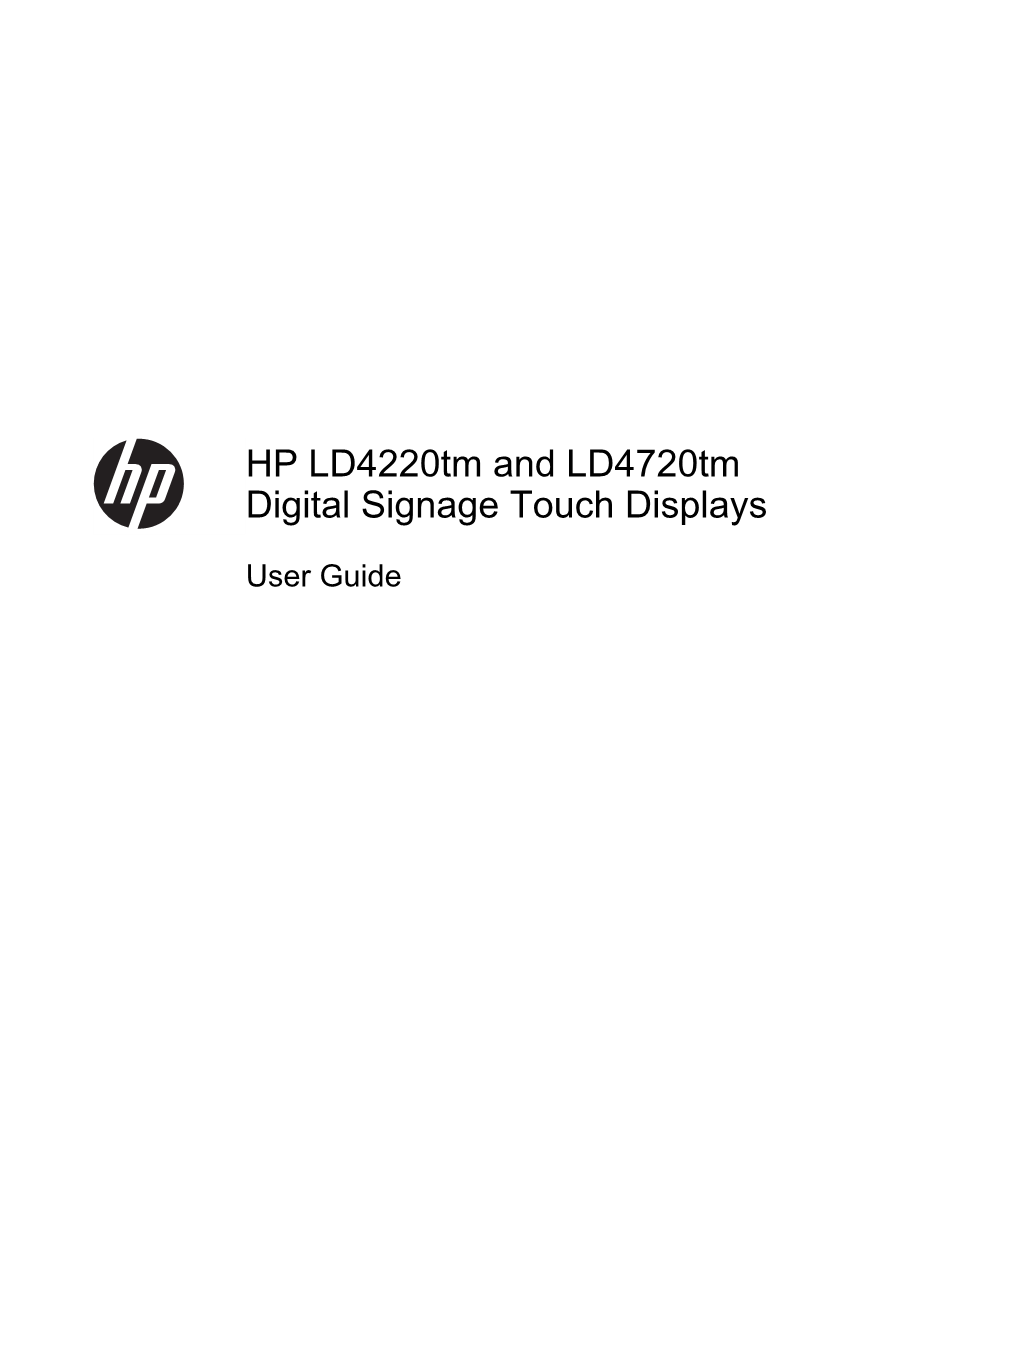 HP Digital Signage Display